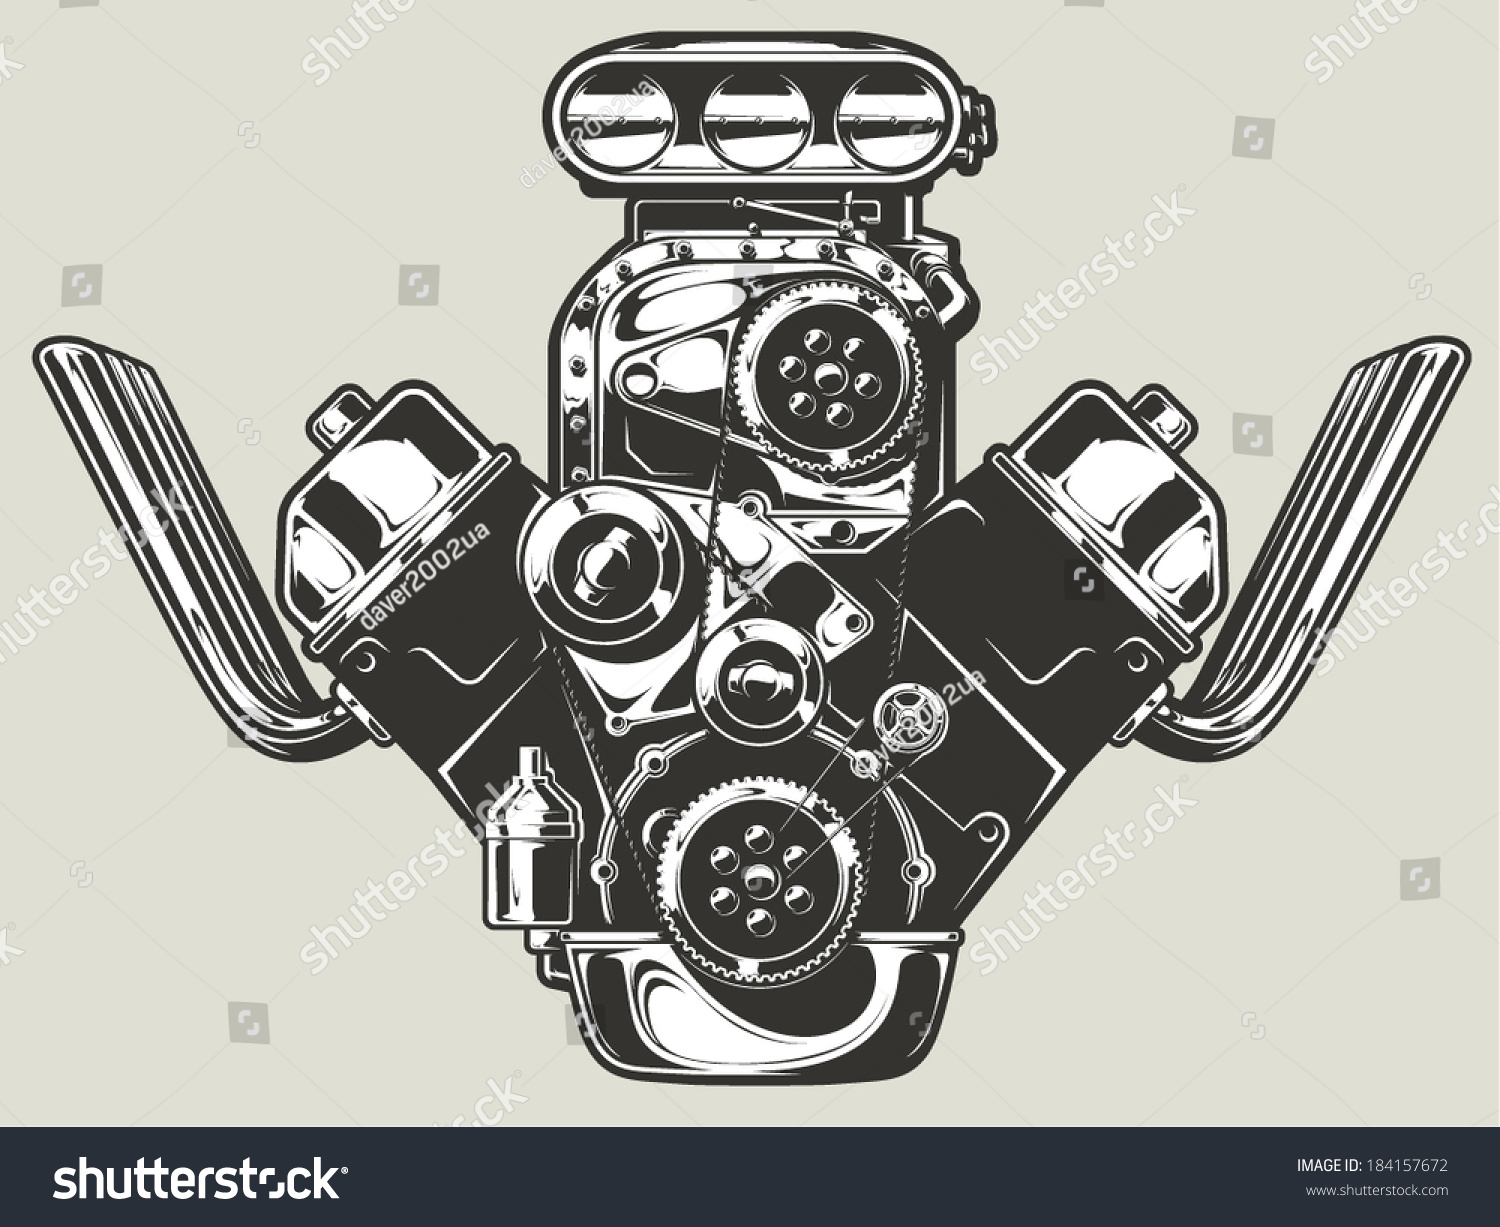 auto engine clip art - photo #42